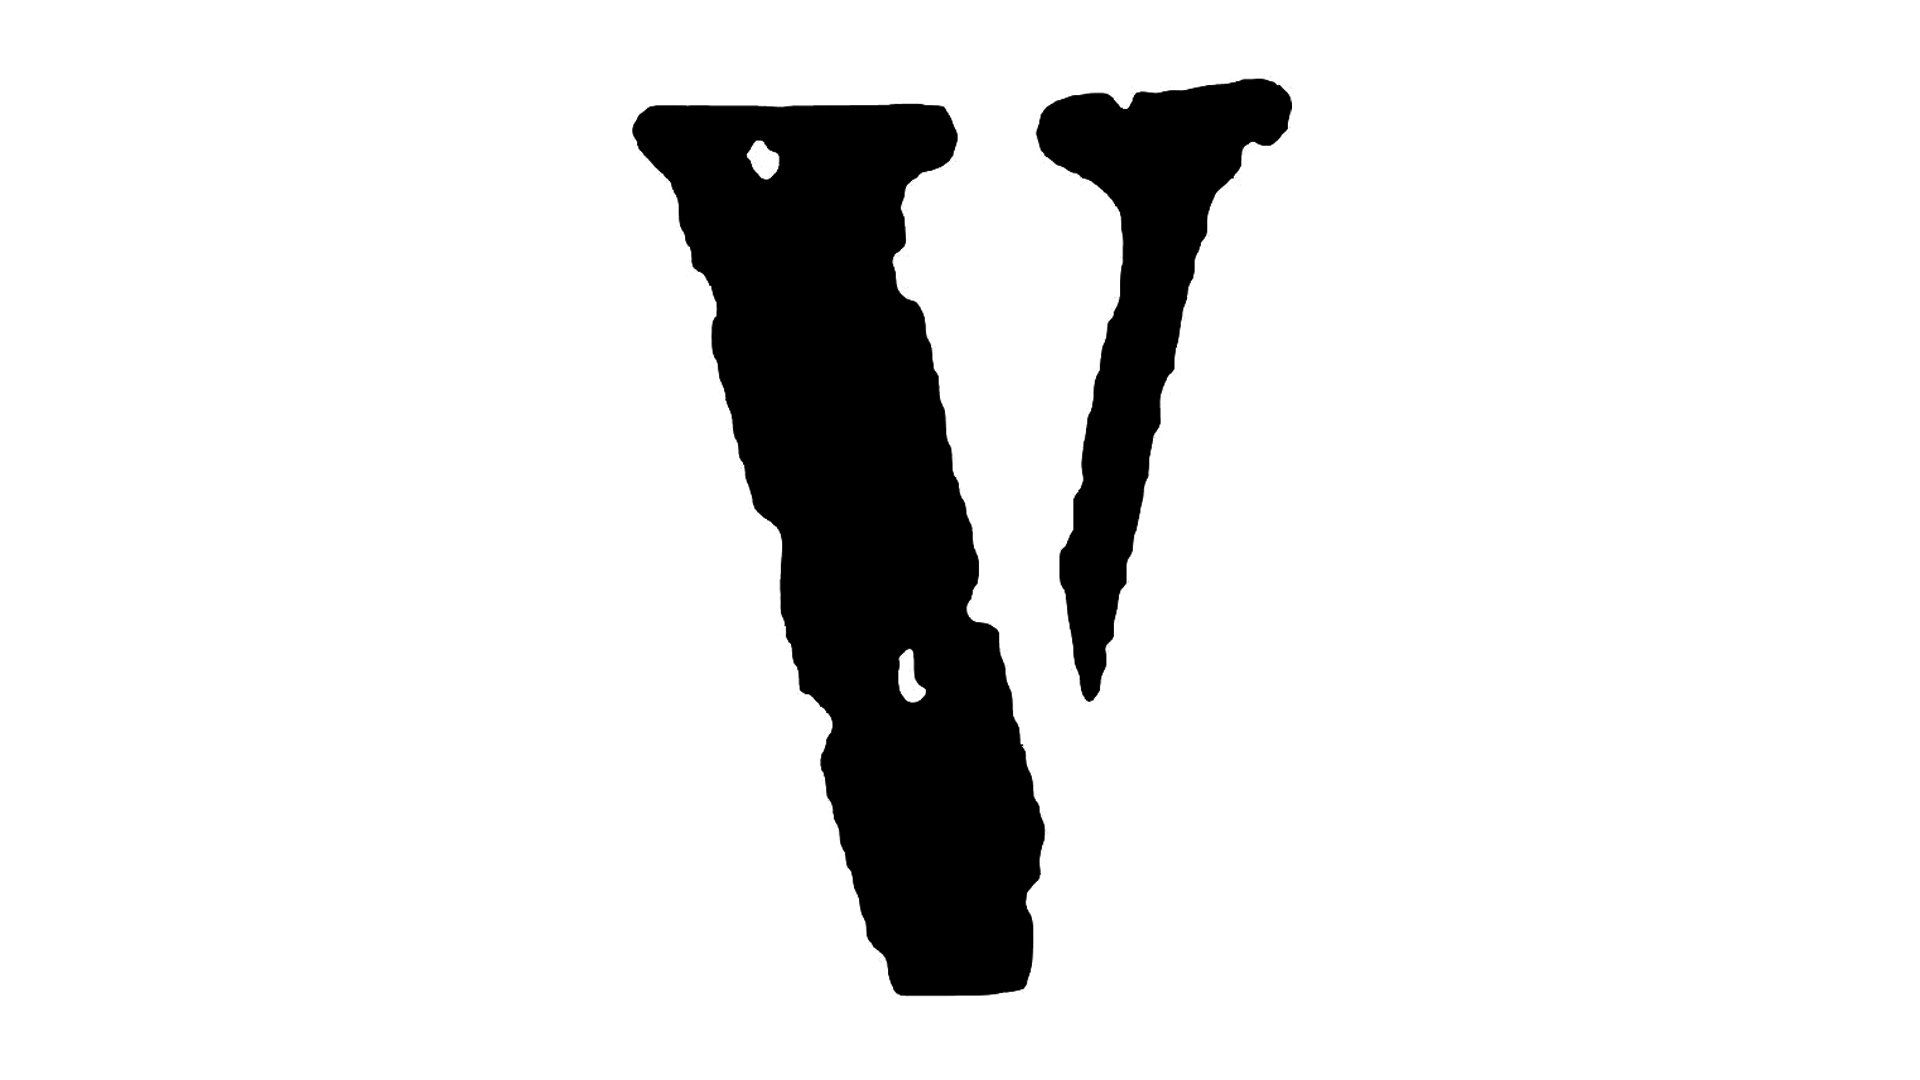 Vlone logo and symbol, meaning, history .1000logos.net